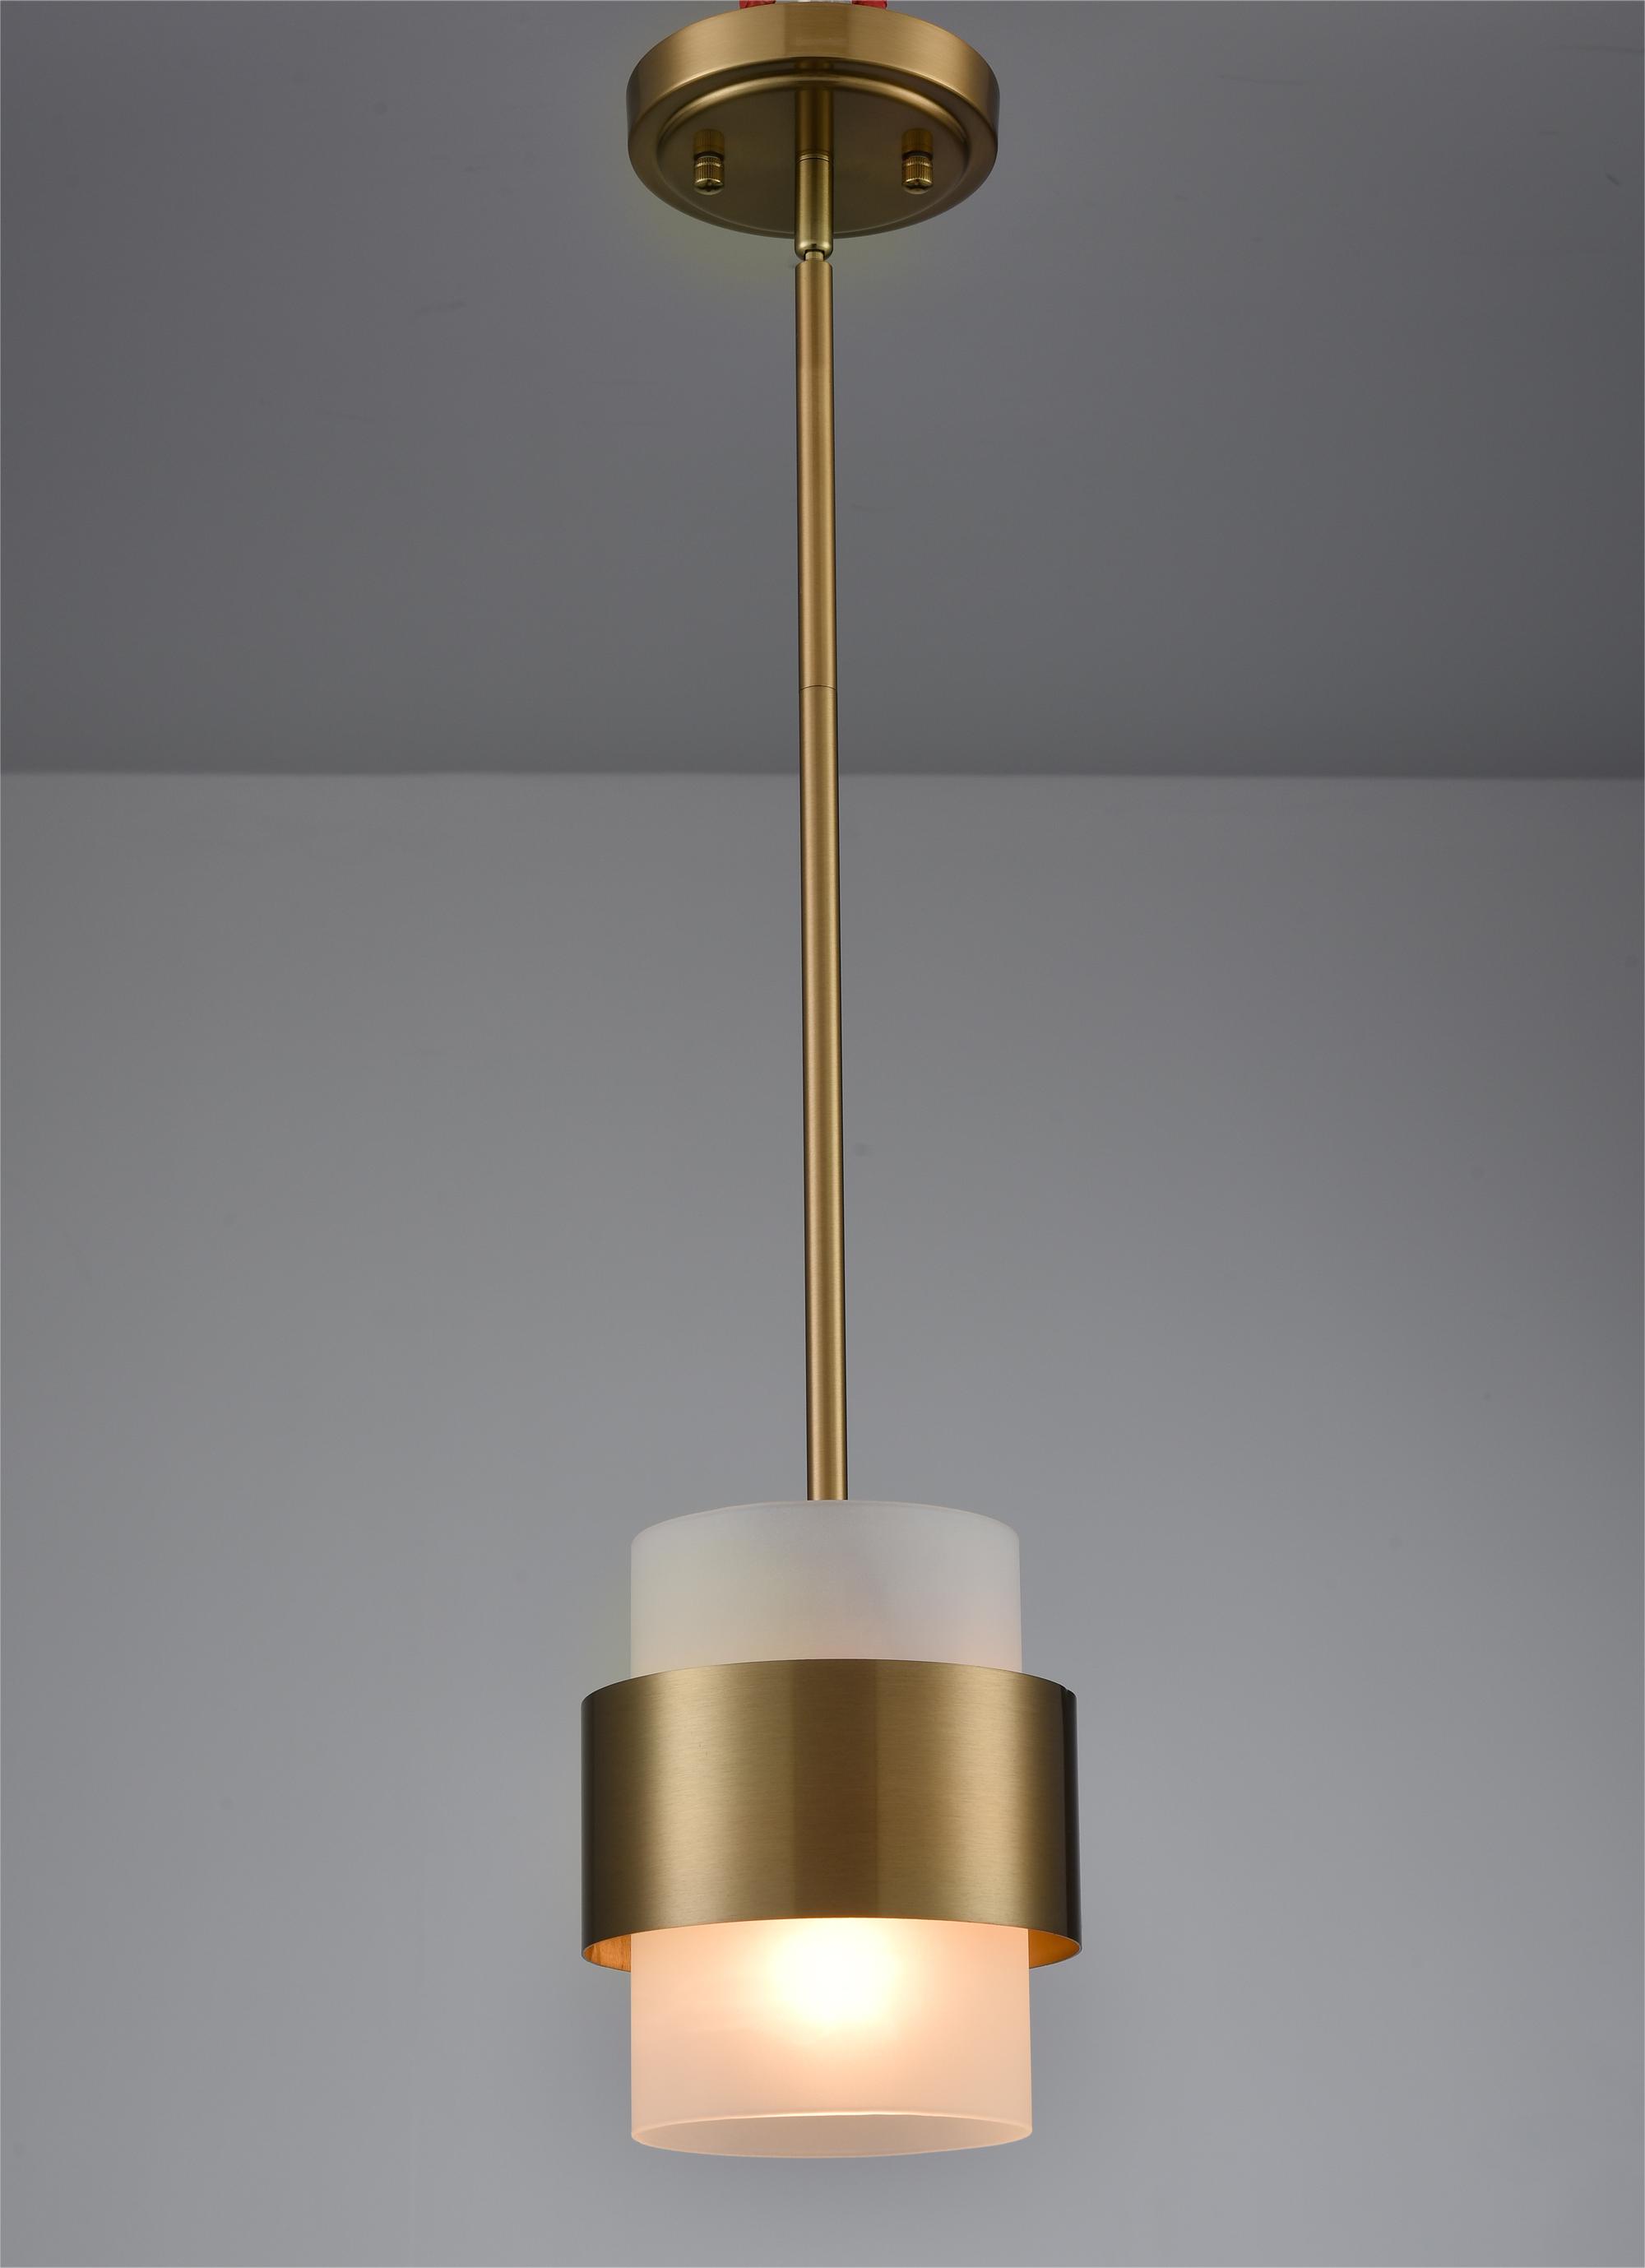 Modern Adjustable Pendant Light Fixtures Over Kitchen Island Lighting Ceiling Hanging Metal Industrial Mini Cylinder Pendant Lighting Frosted Glass Shade